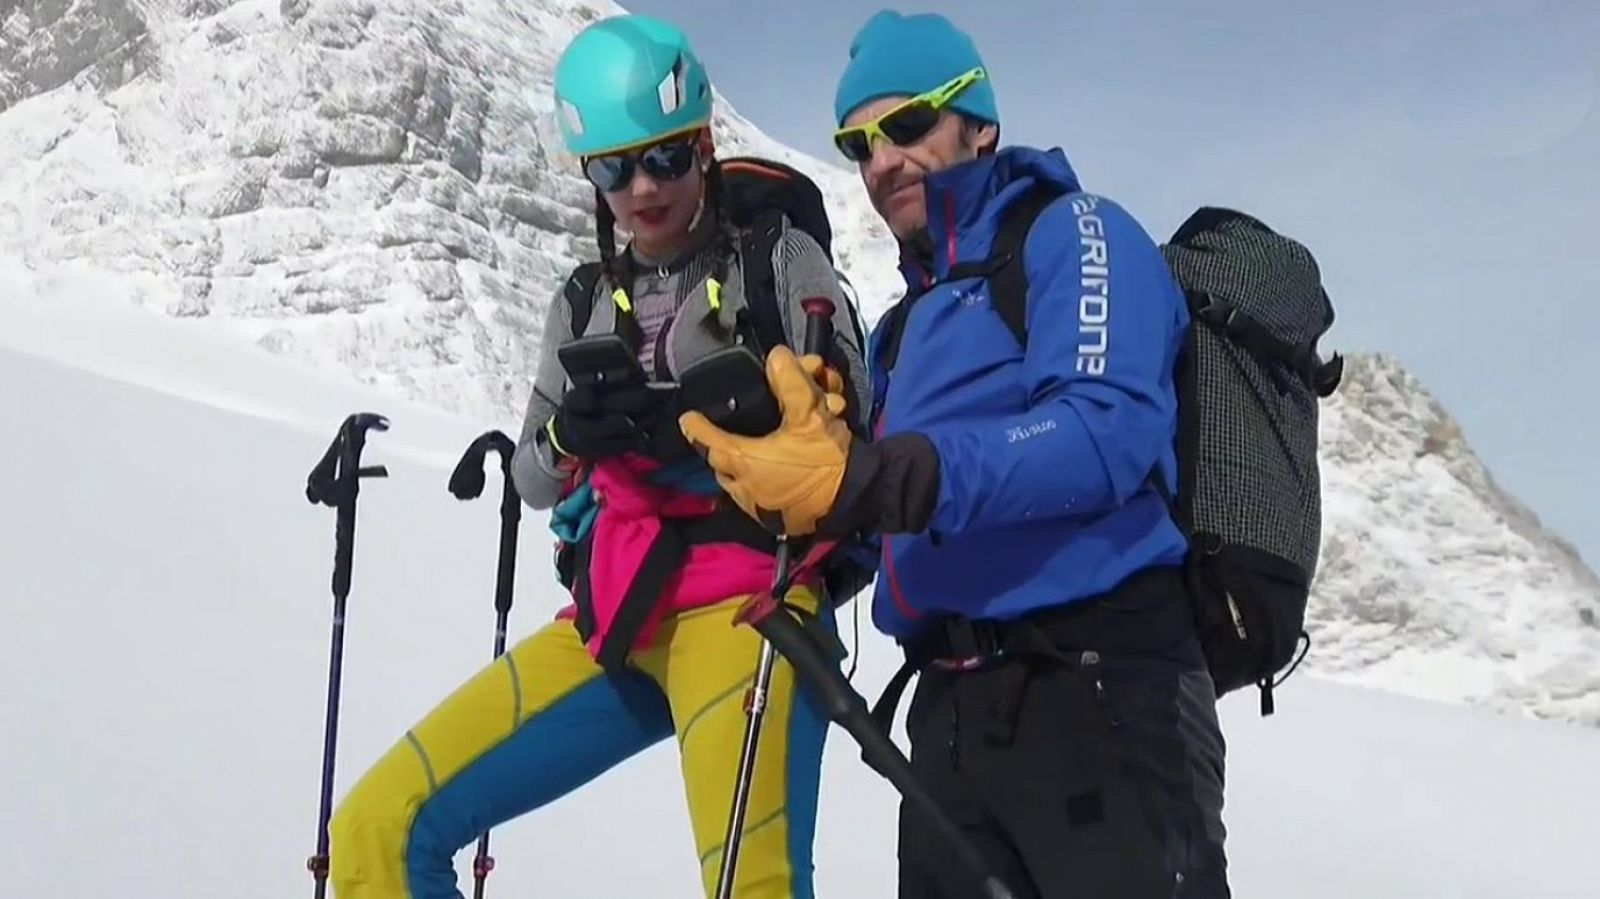 Deporte de montaña - Documental "Aventura 2 Challenge" - RTVE.es